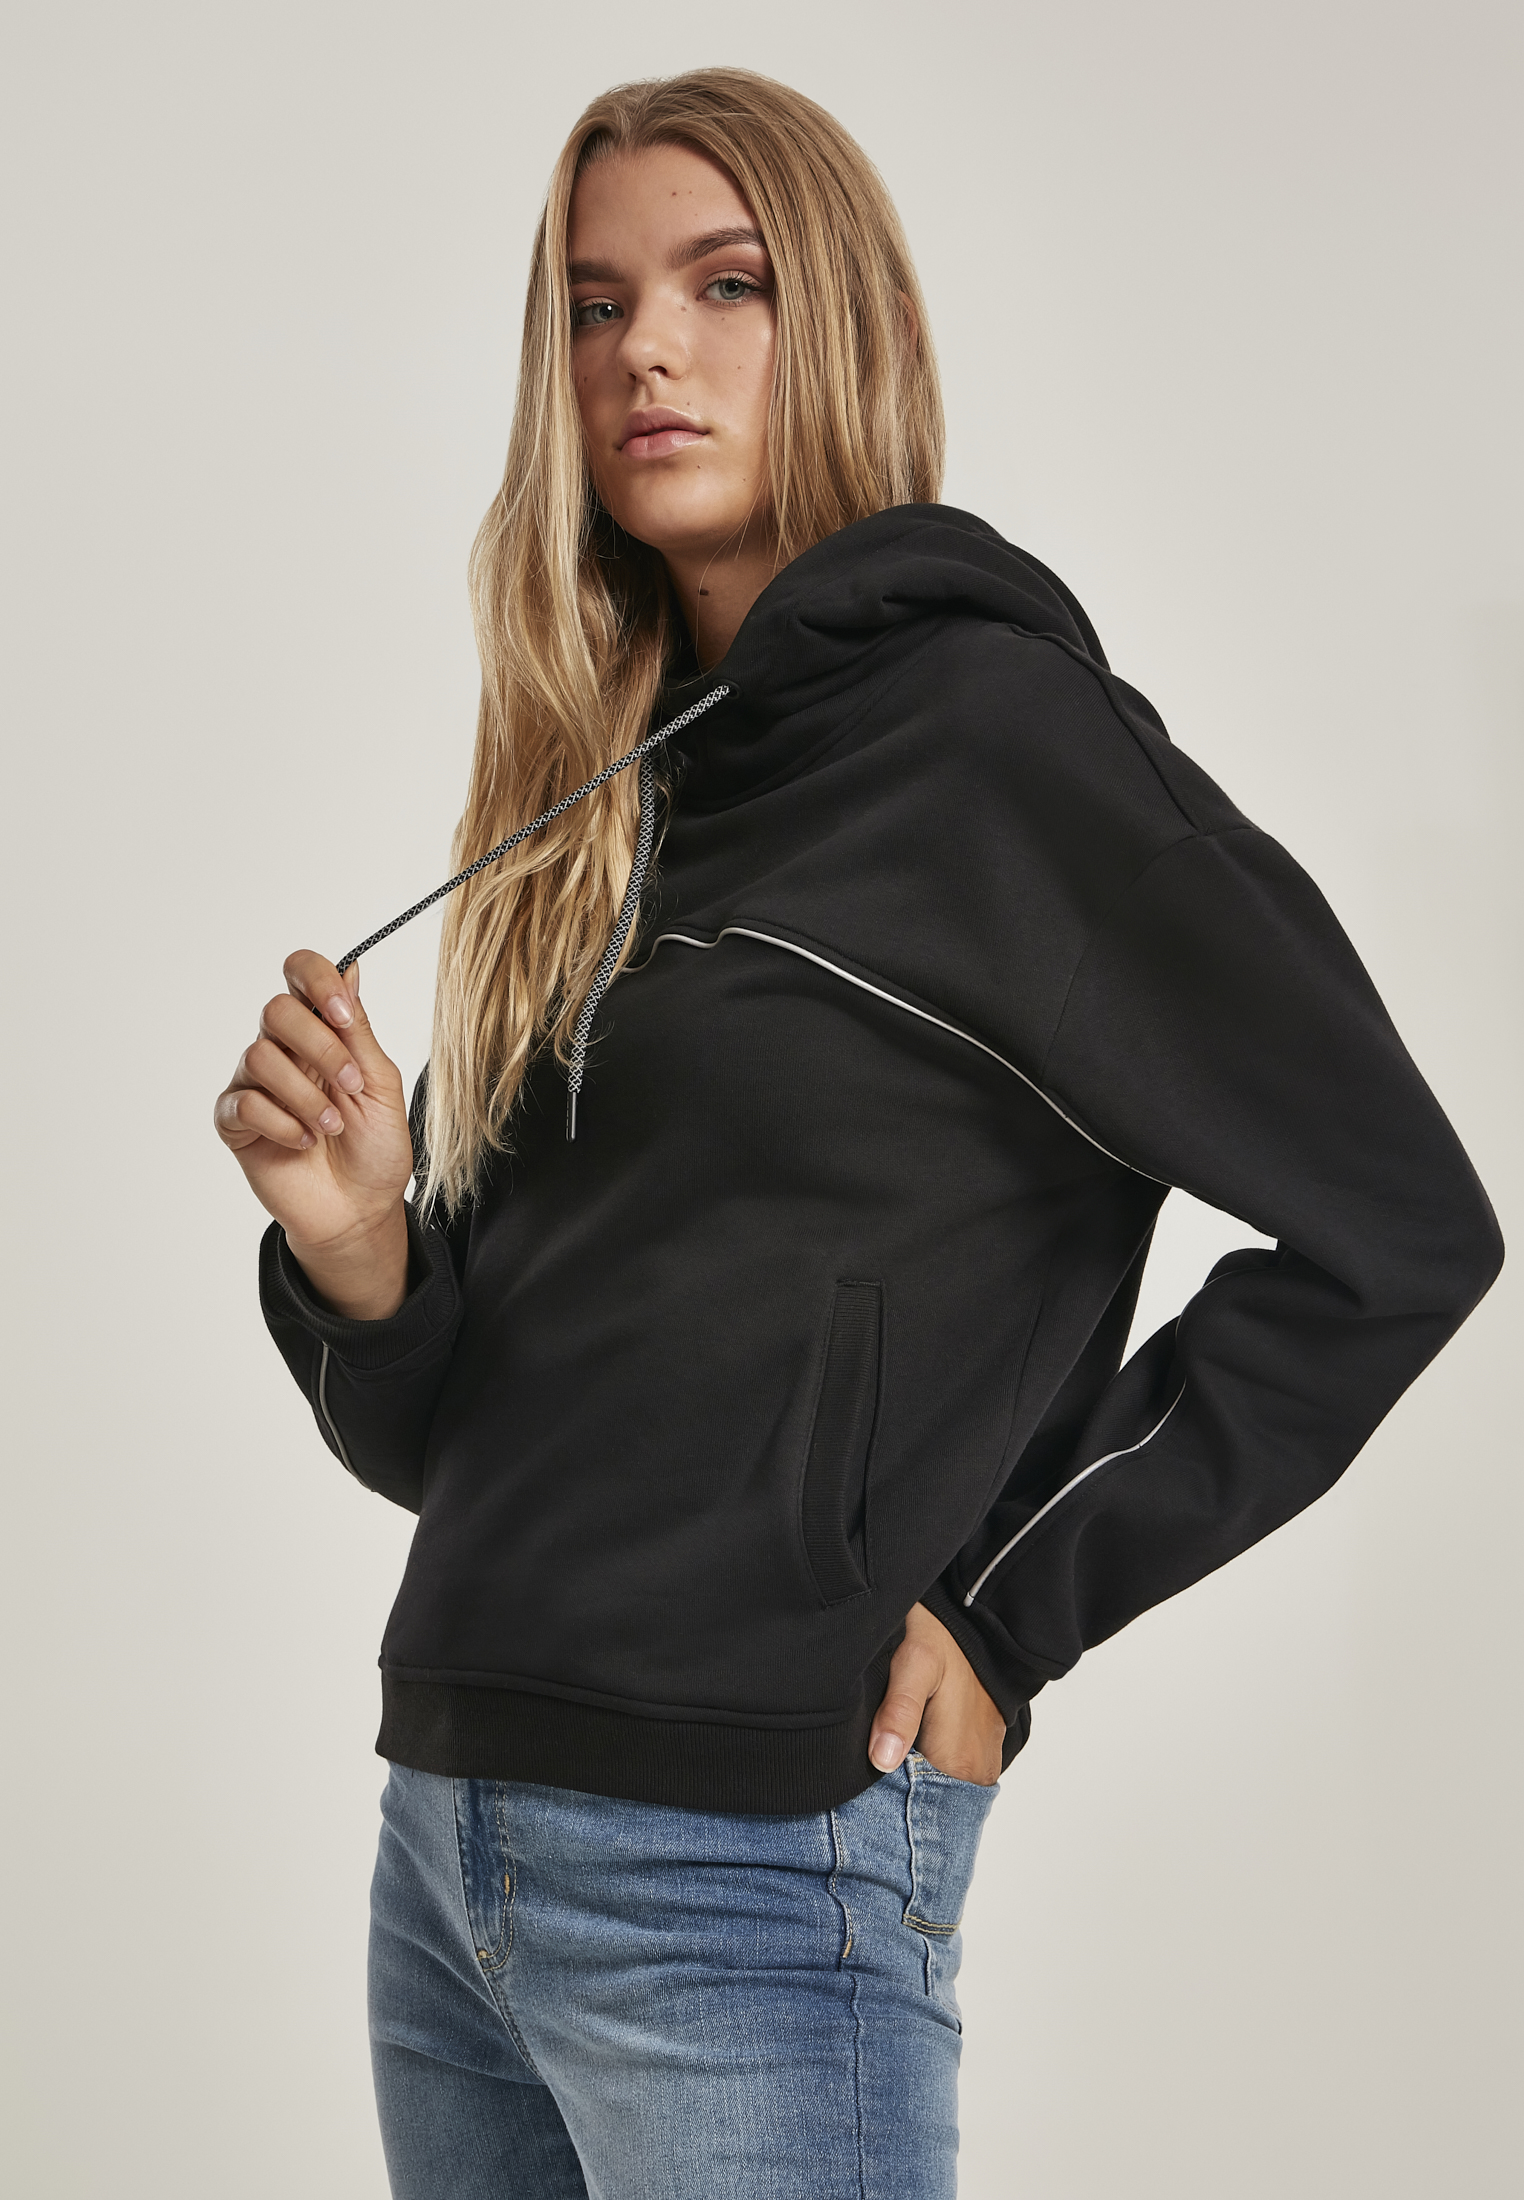 Women's reflective sweatshirt black